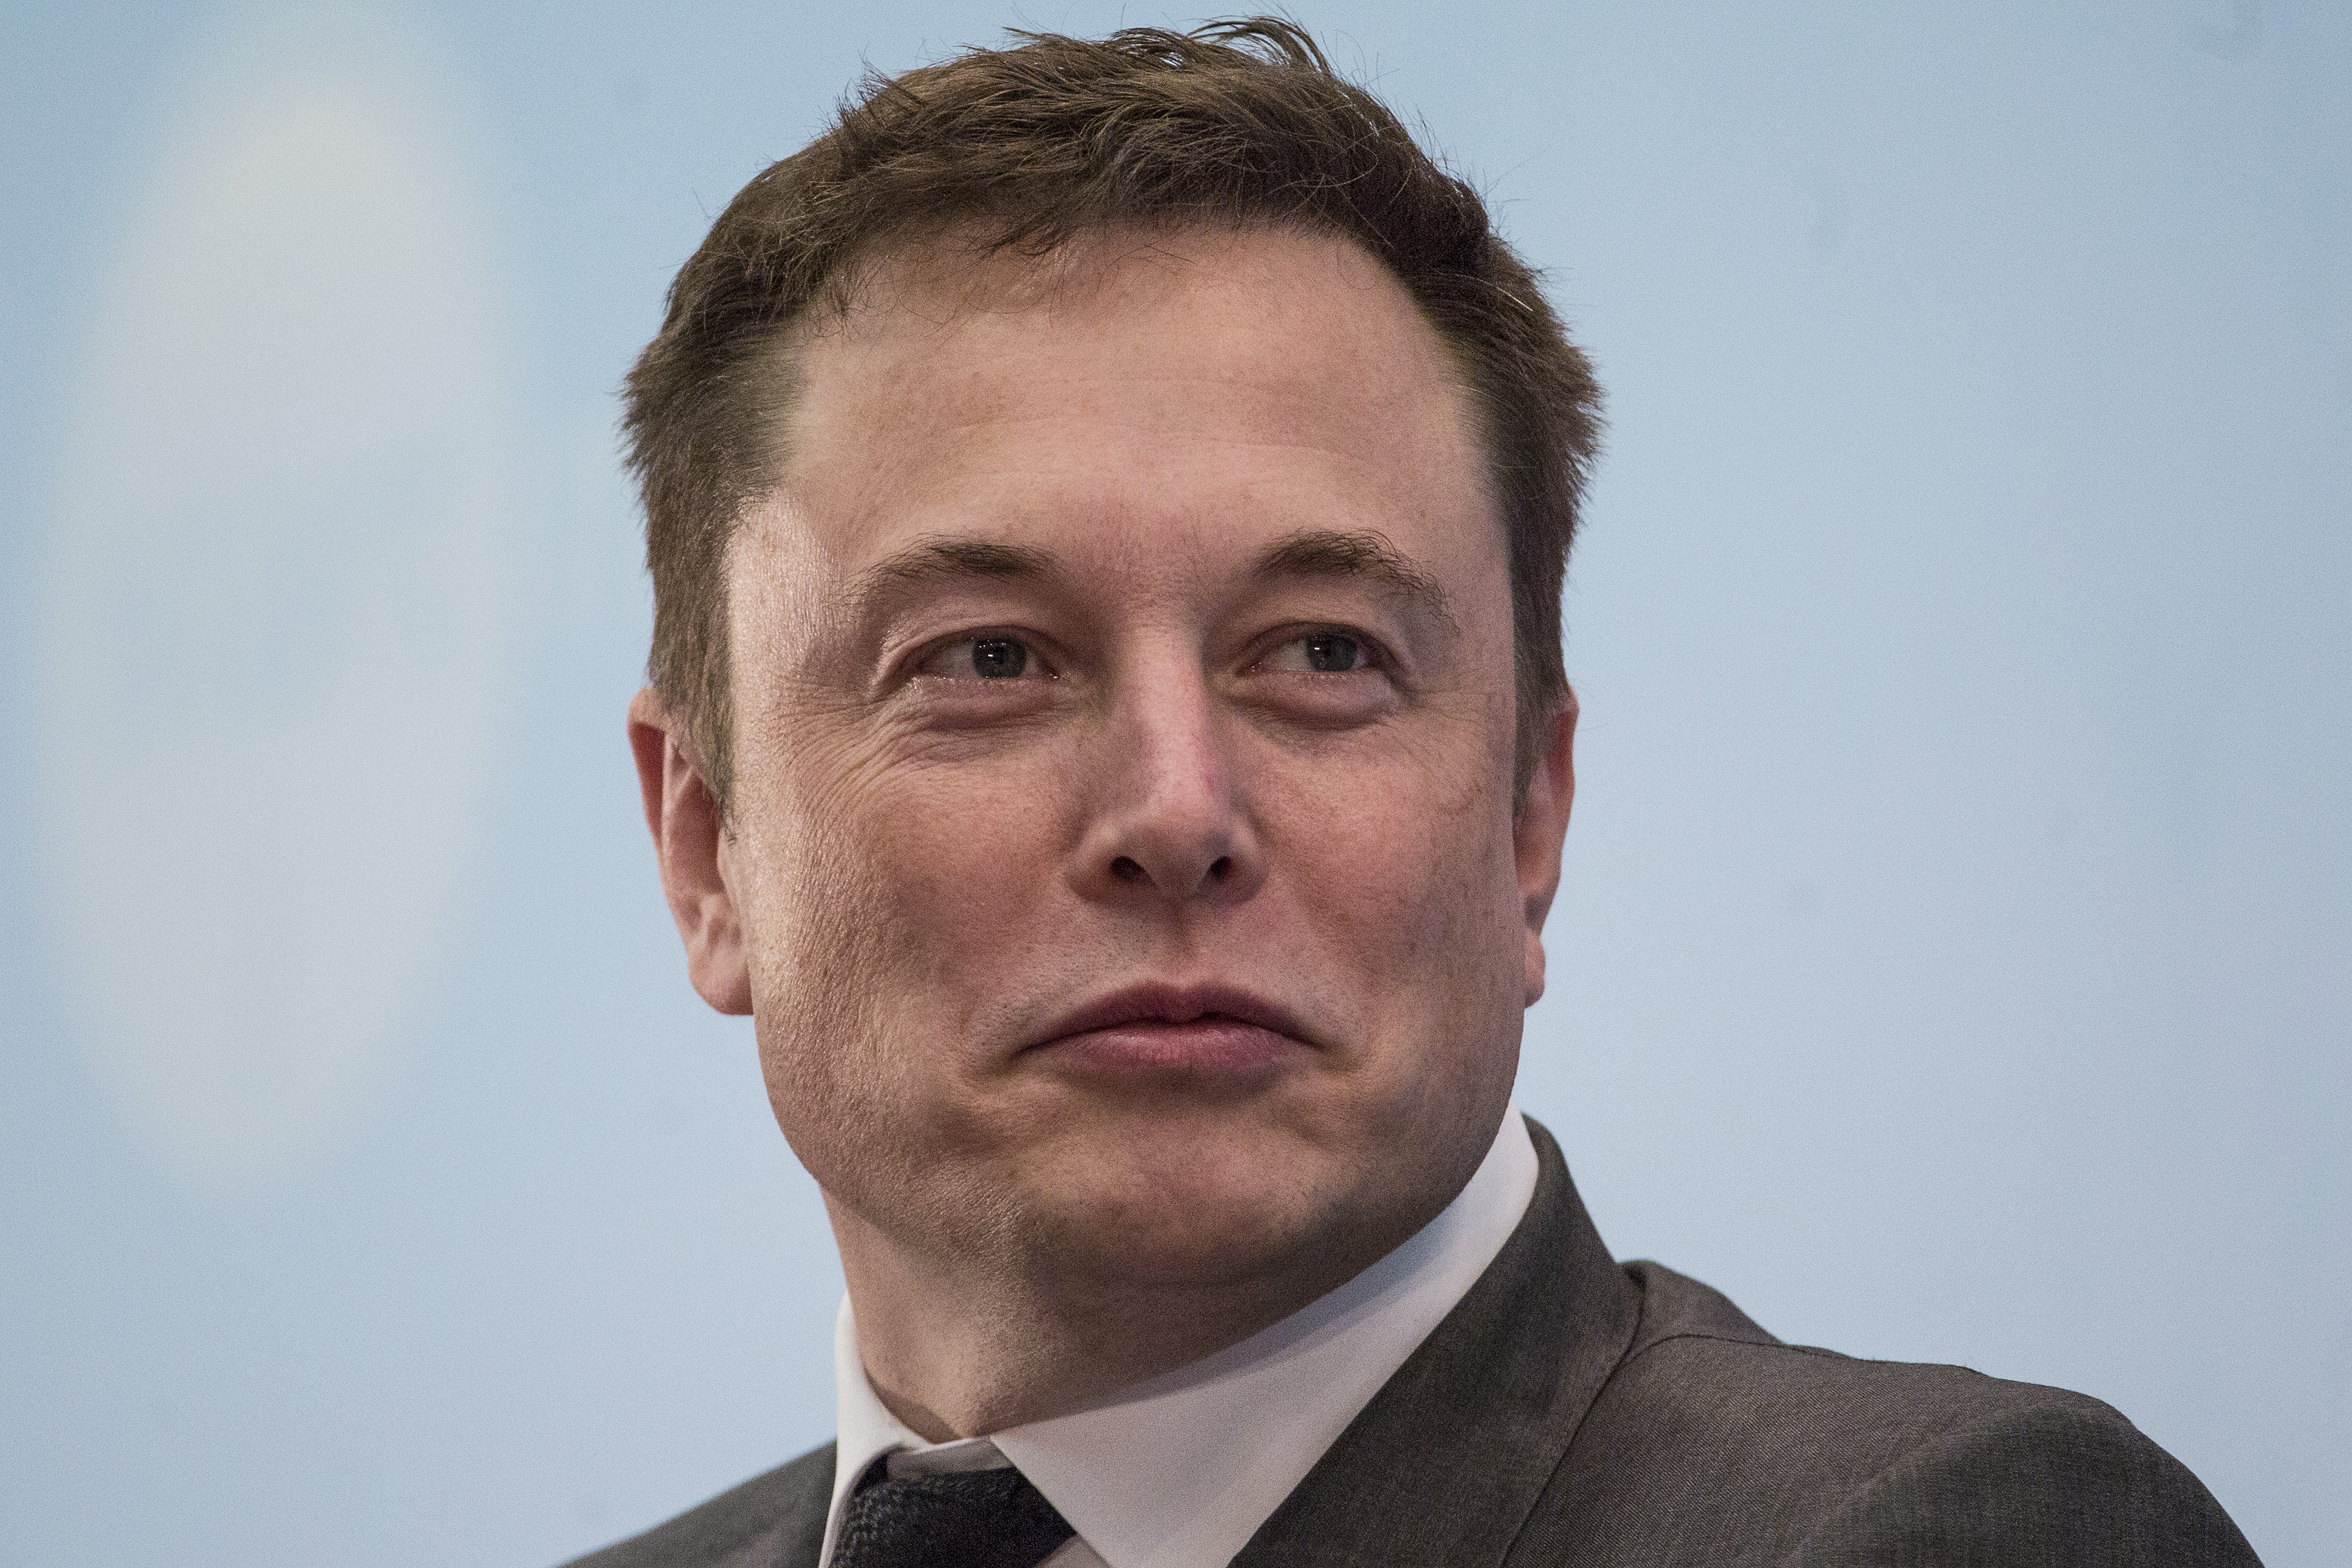 Tesla Motors Inc. Chief Executive Officer Elon Musk Speaks At StartmeupHK Venture Forum